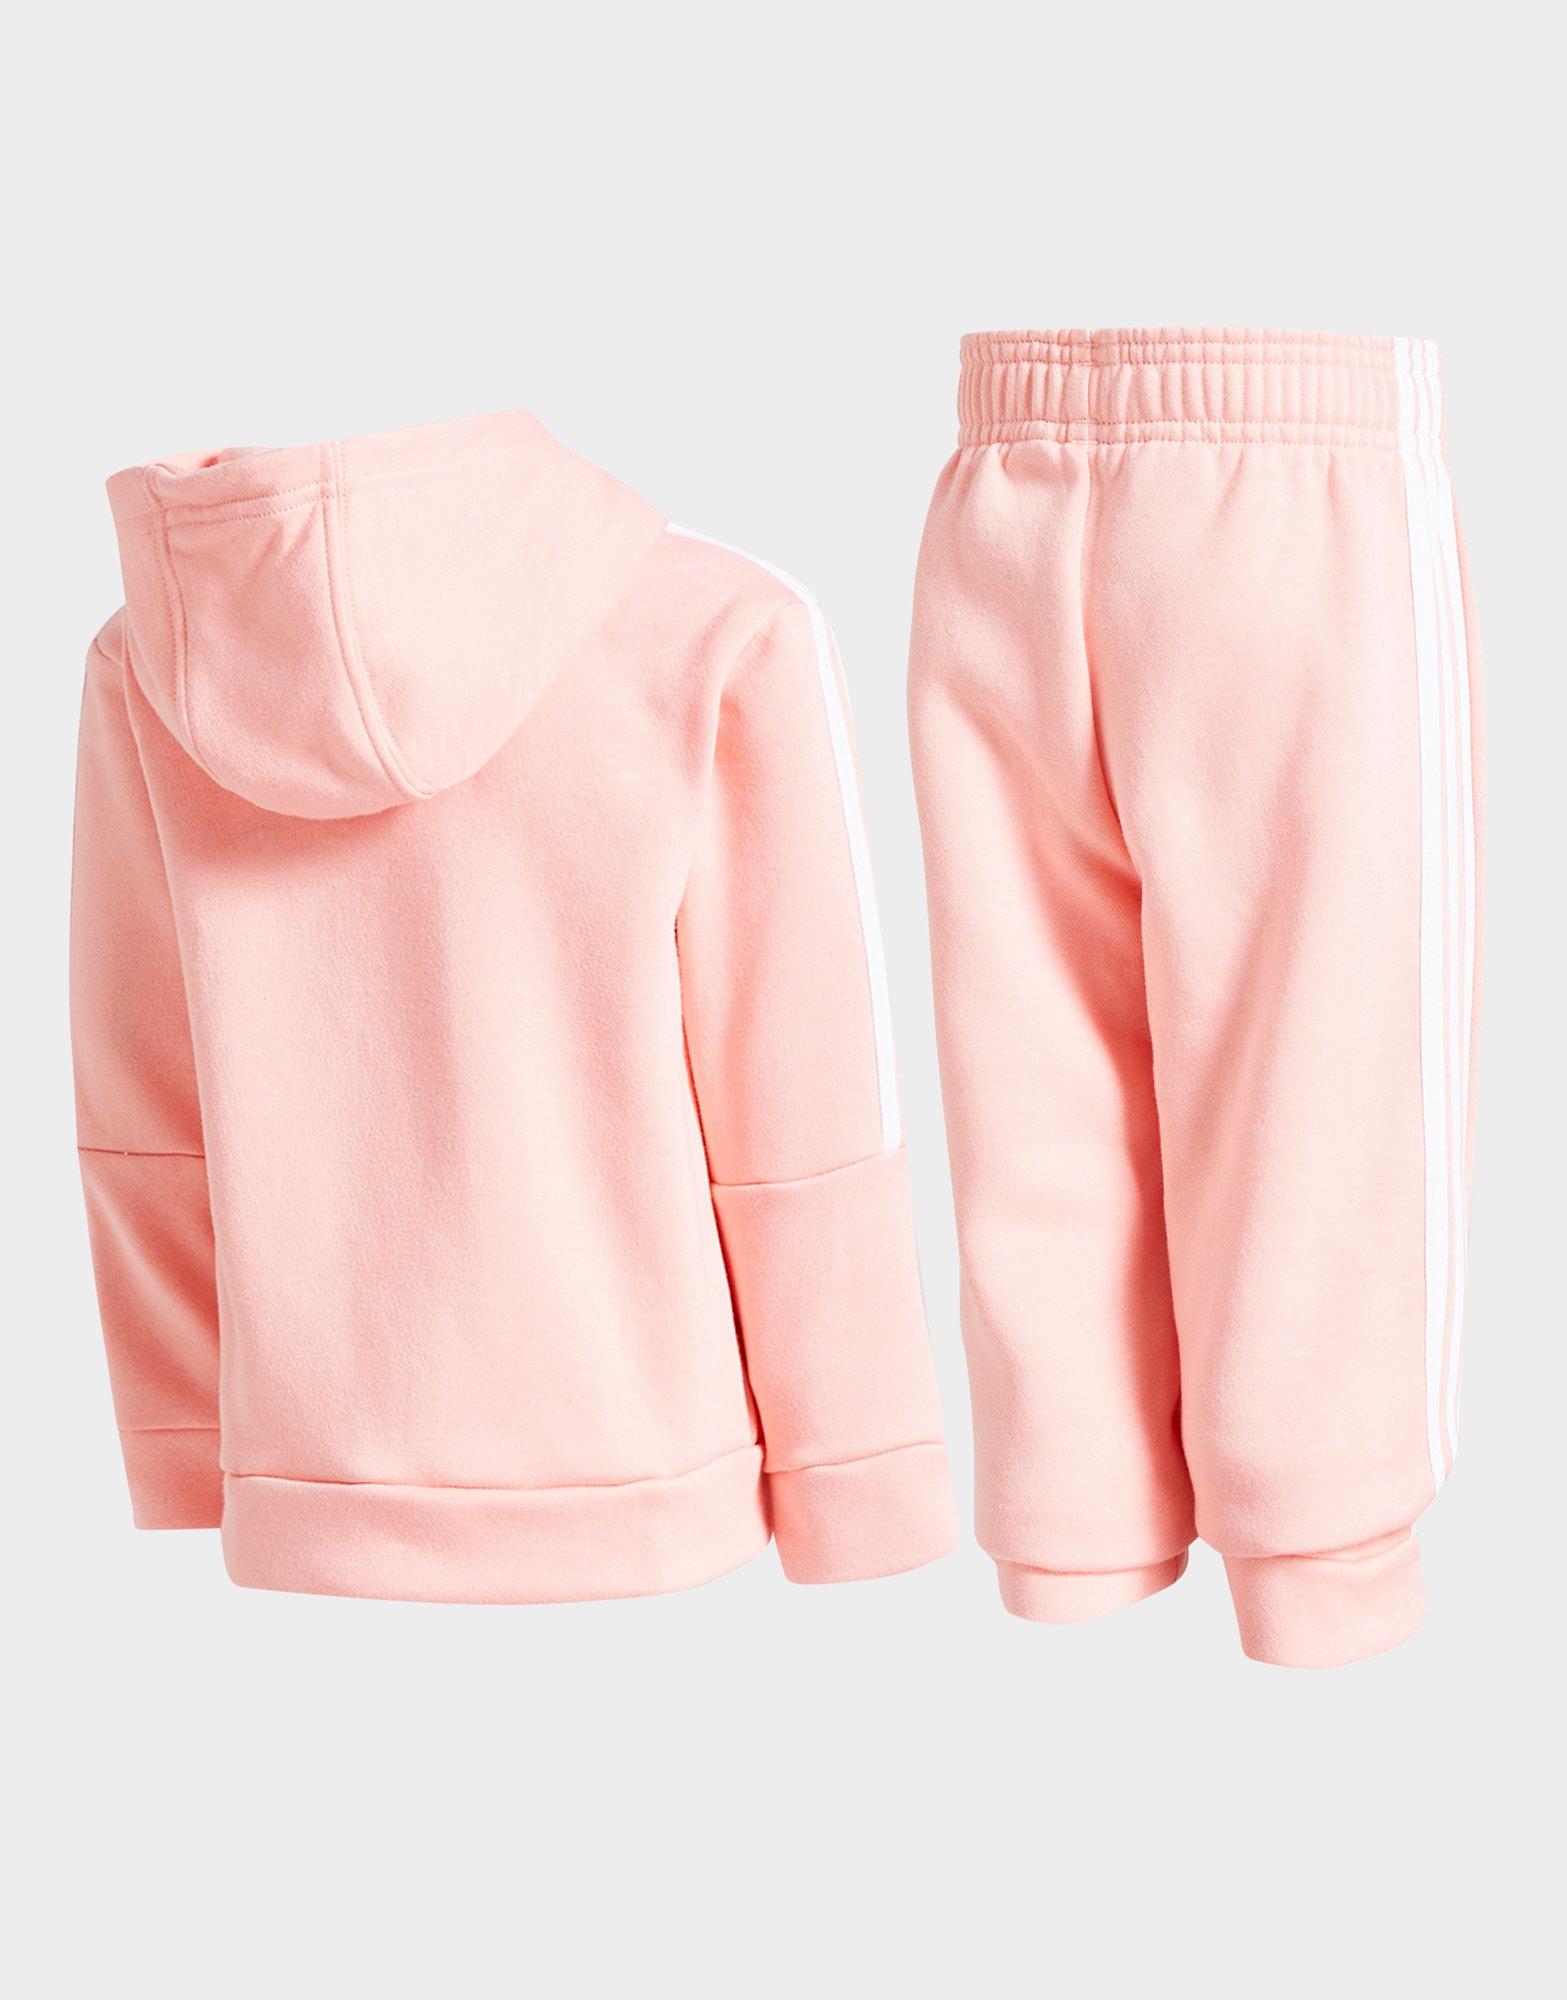 adidas girls pink tracksuit